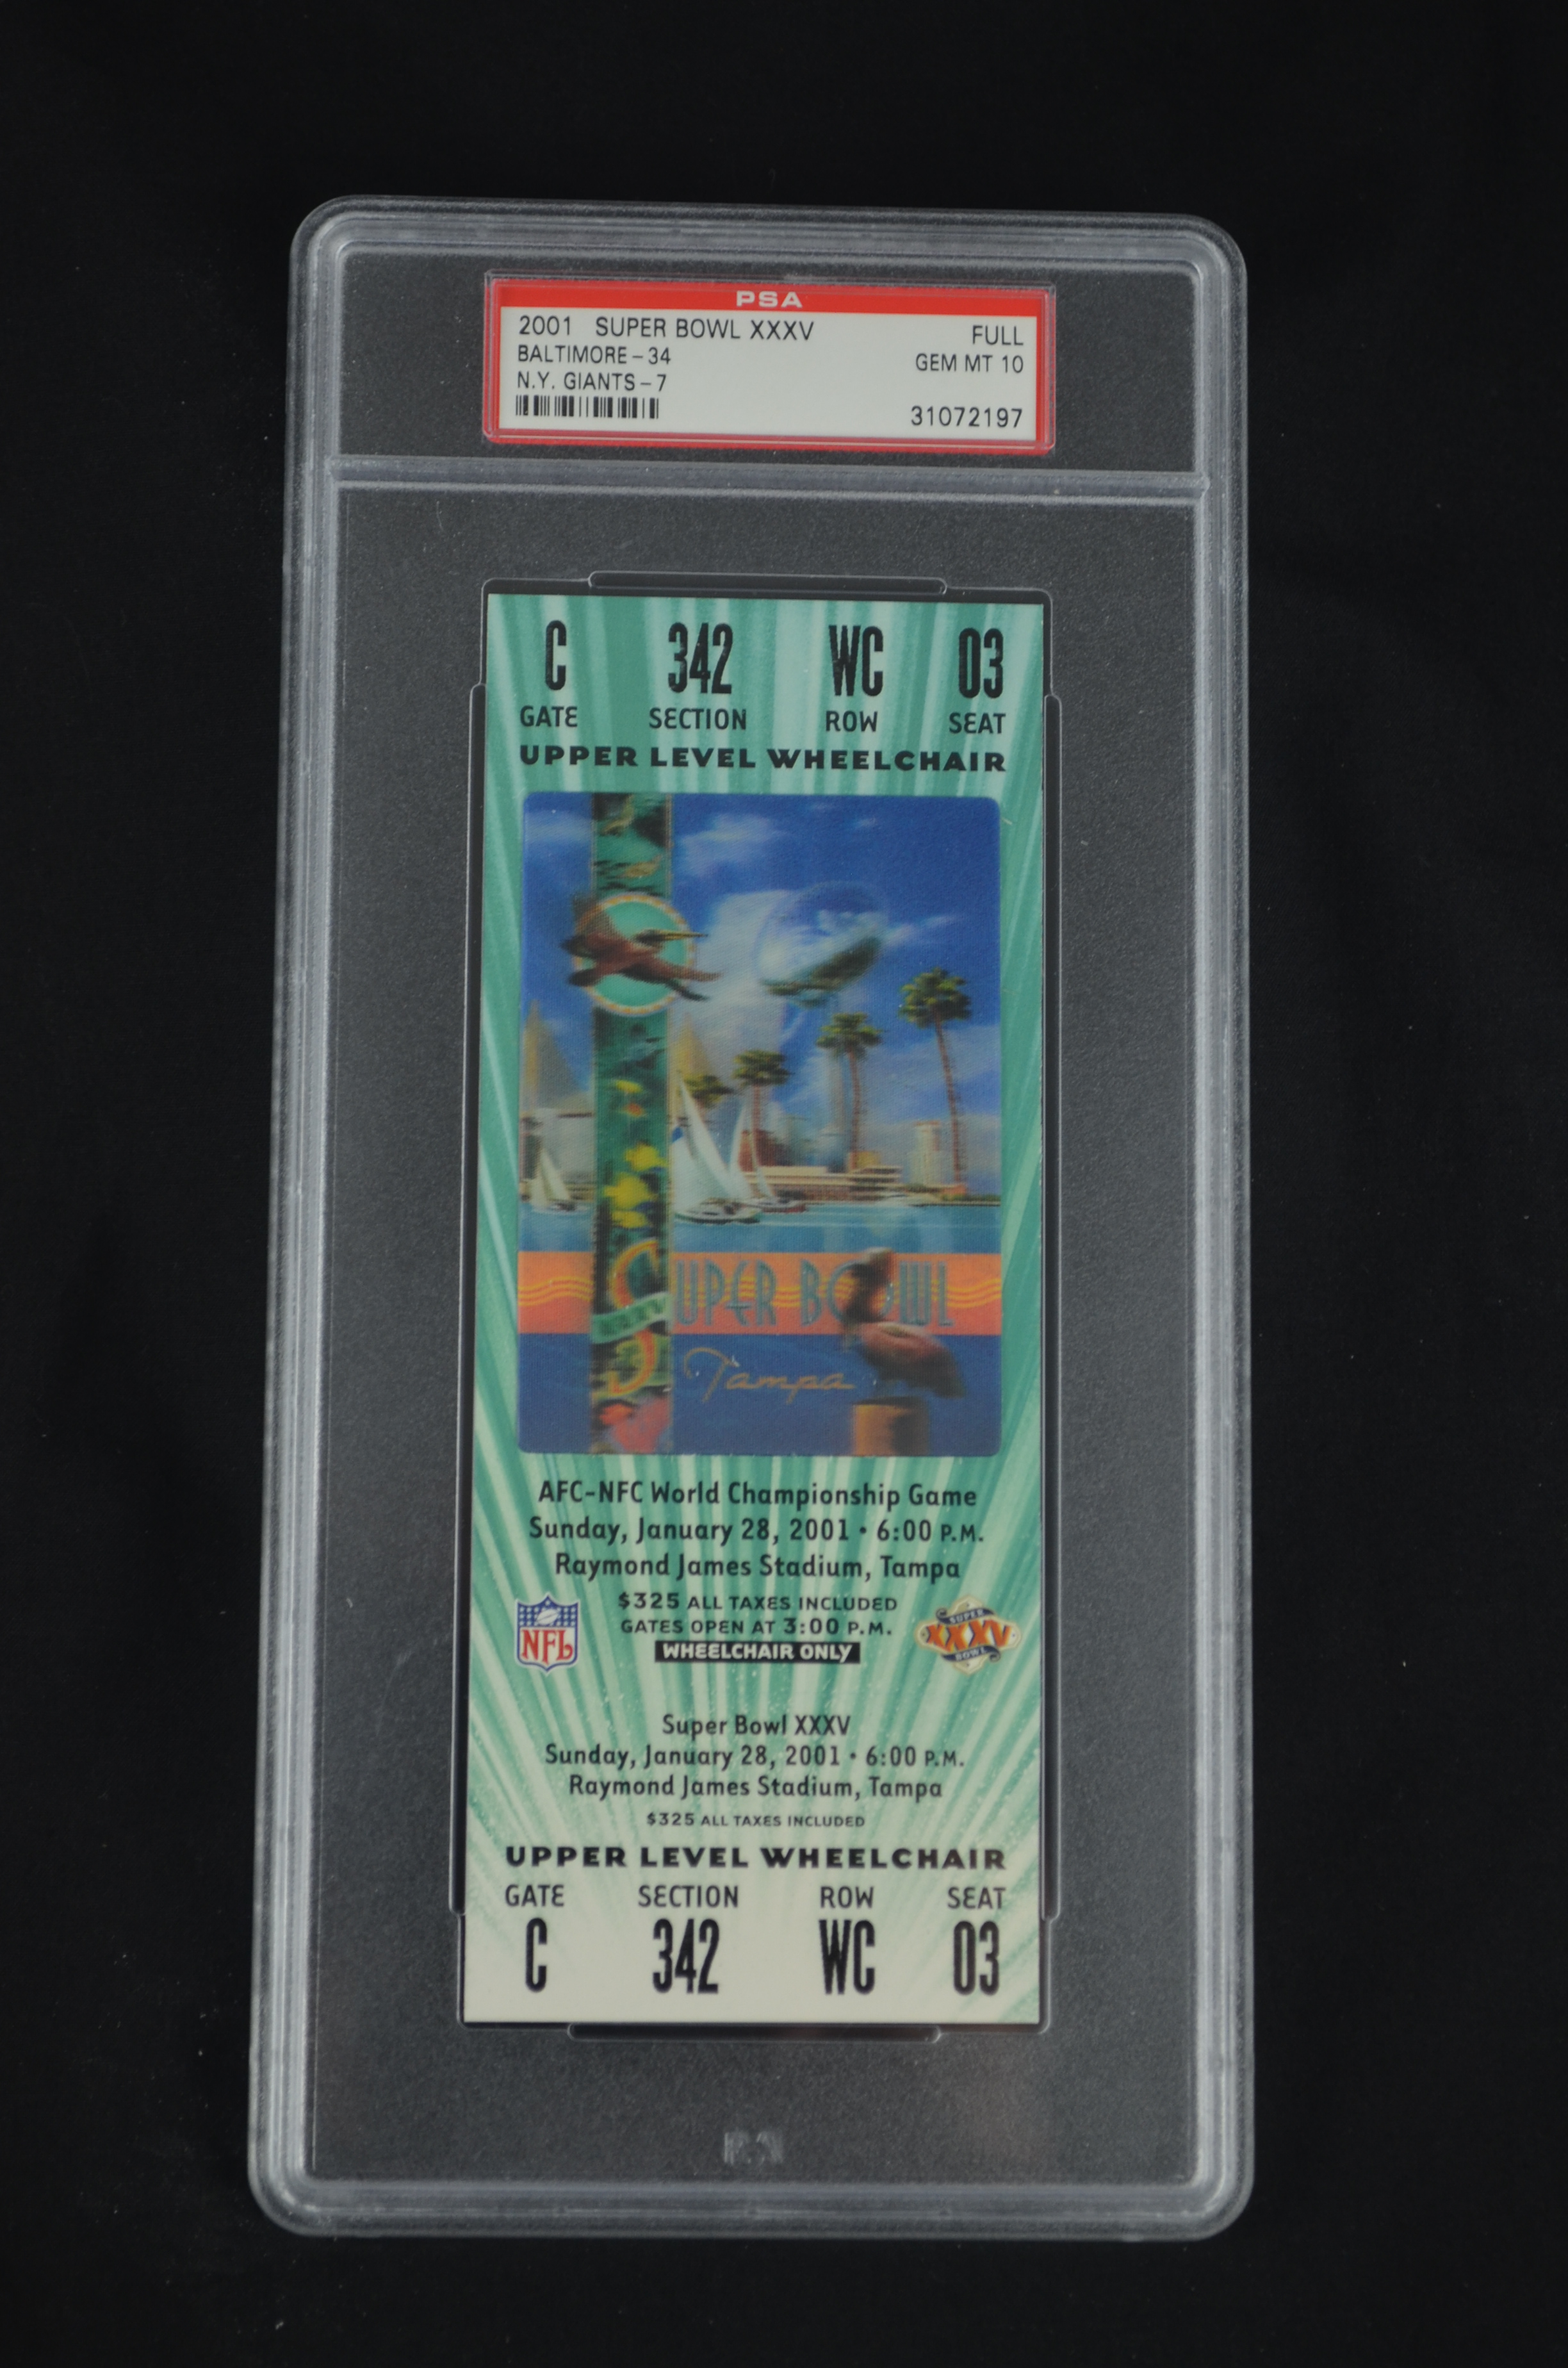 2001 Super Bowl XXXV PSA 8 ticket